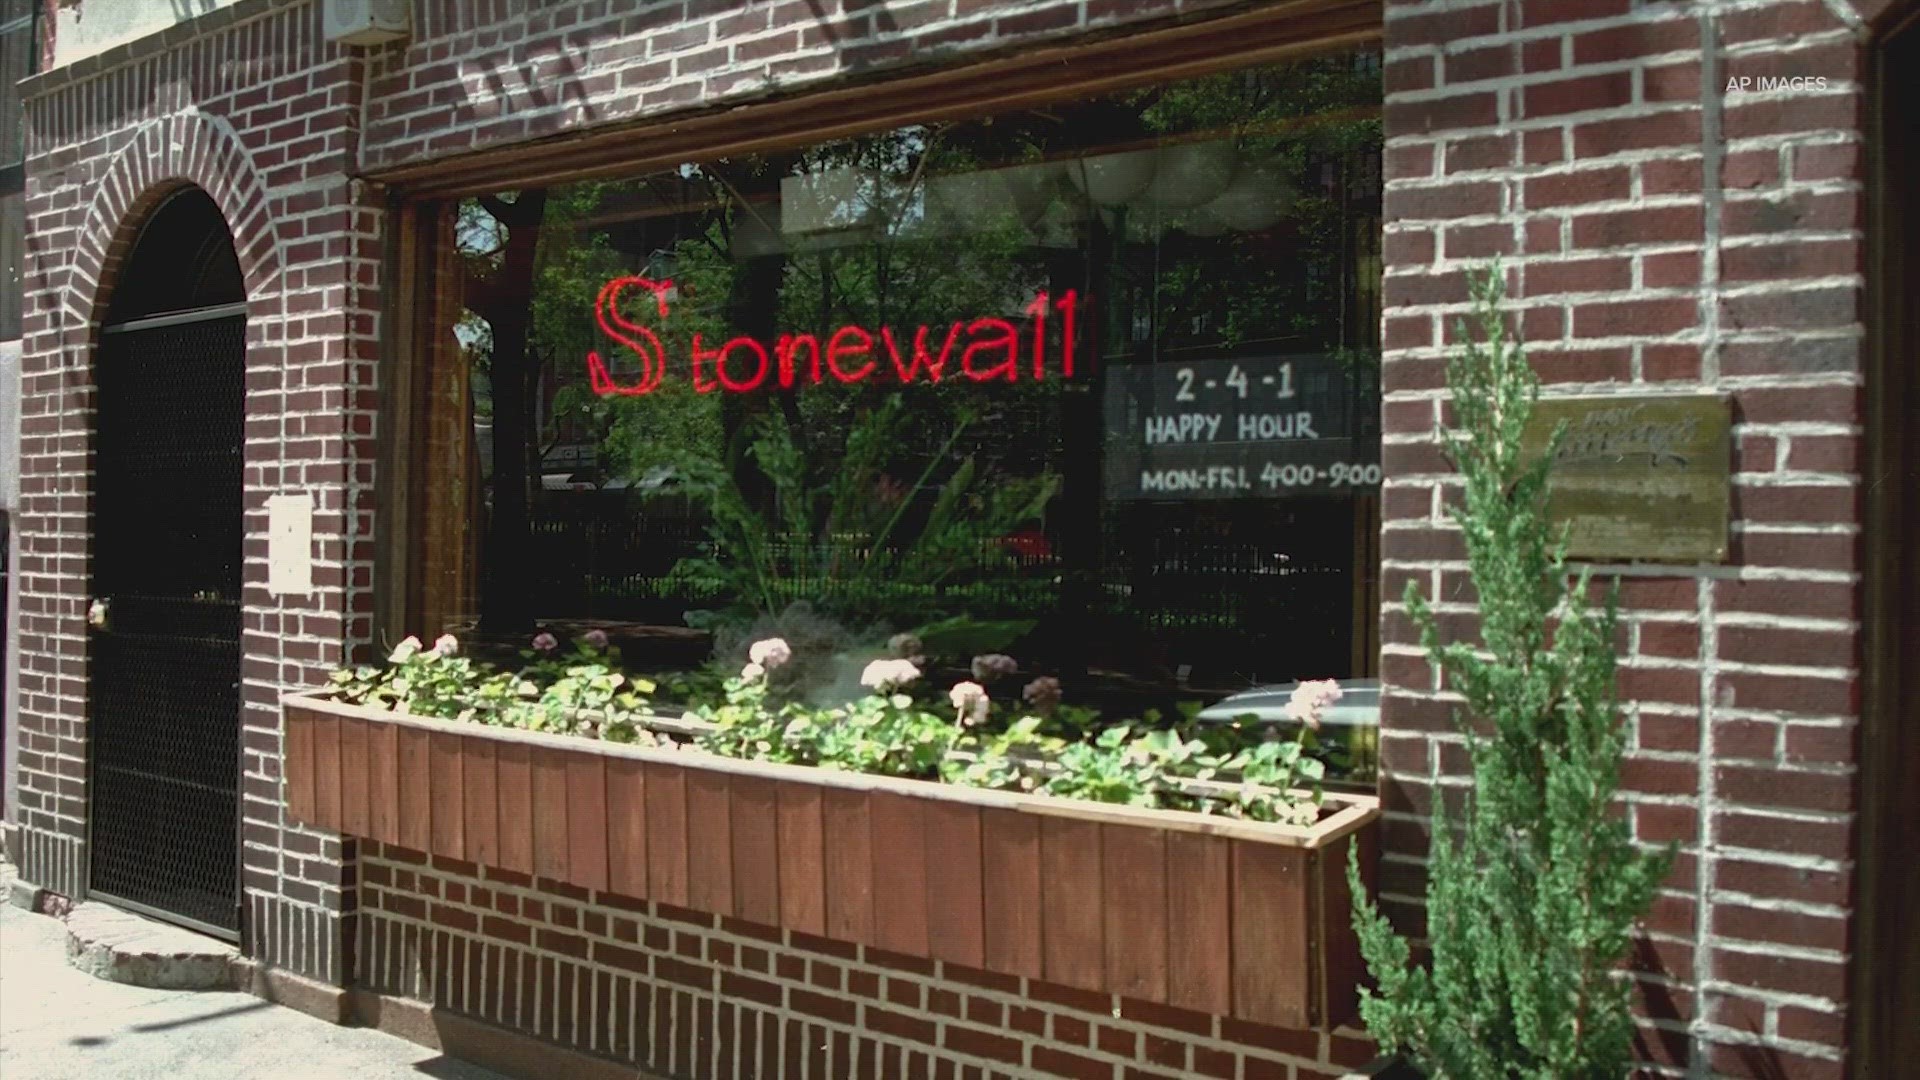 Executive Chef Adriana Maldonado of Houston's Trash Panda Drinking Club said for one night only, the bar is turning to the iconic Stonewall Inn.